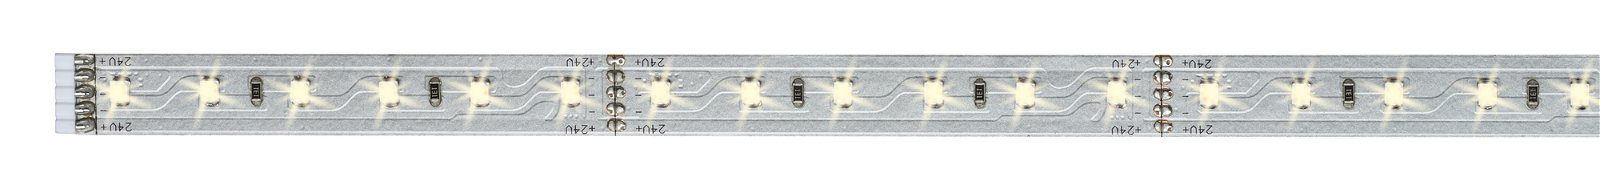 MaxLED 500 LED Strip Warm white Individual strip 1m 6W 550lm/m 2700K